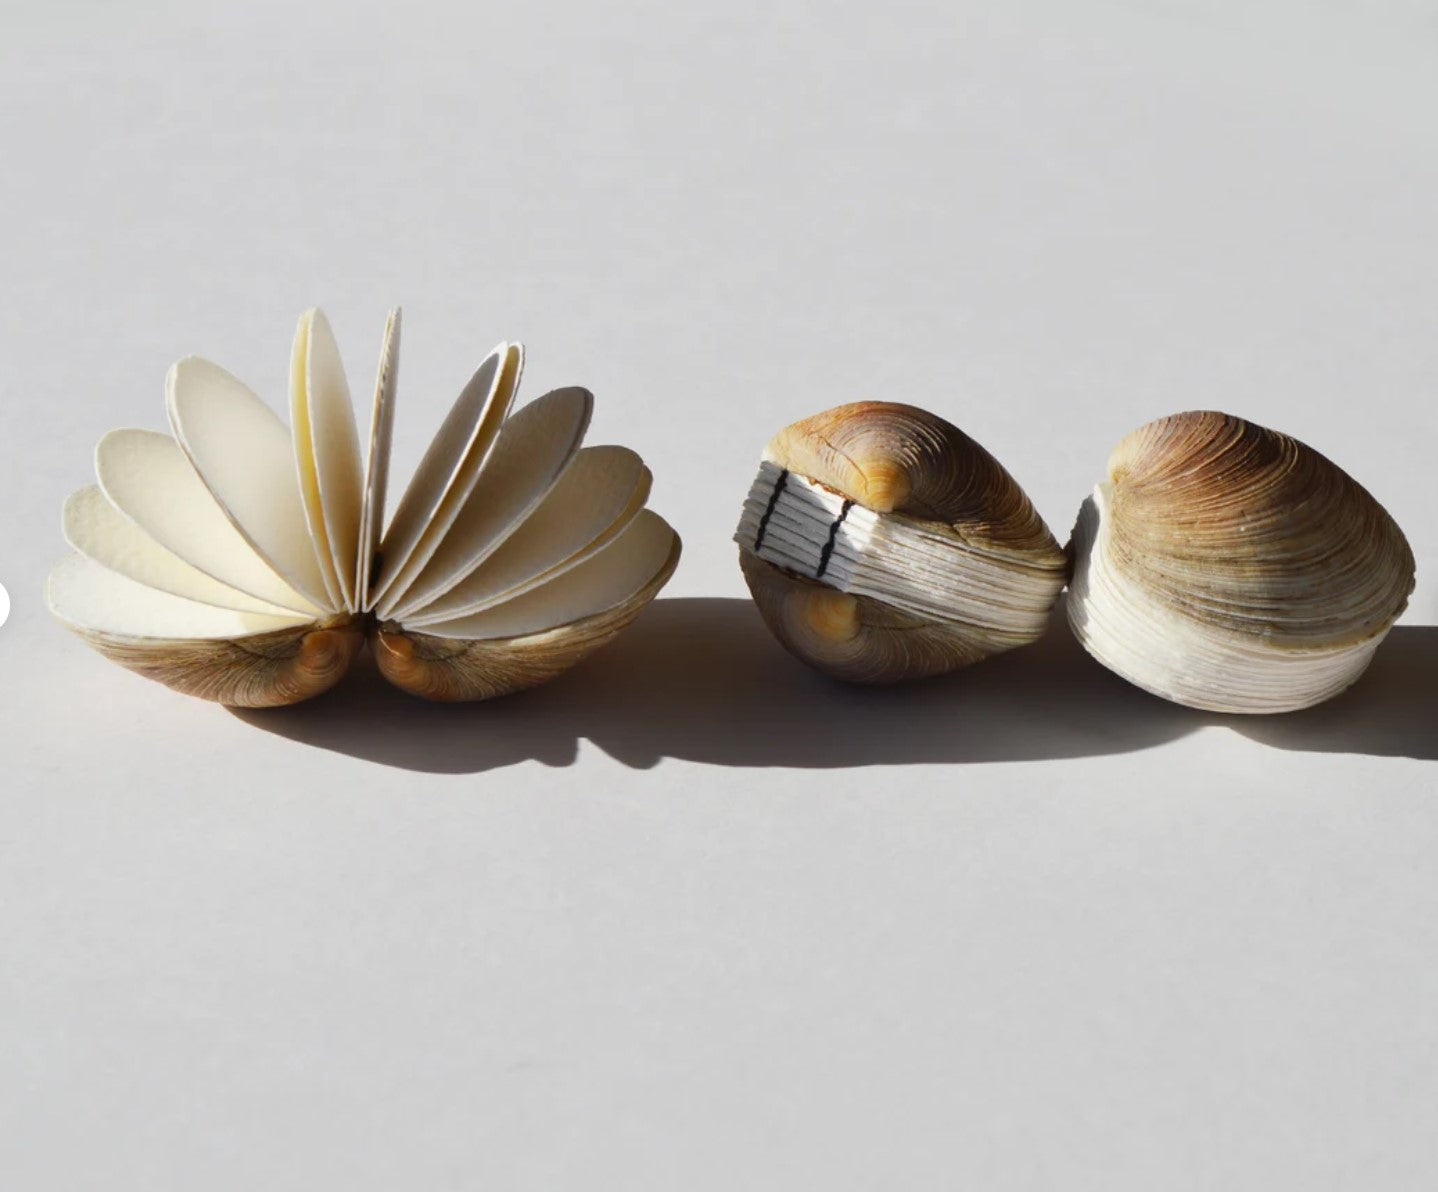 Genuine seashell art journal / Blank book / Micro watercolor paper sketchbook / tiny handmade art / nature walk mini book / Manila clams